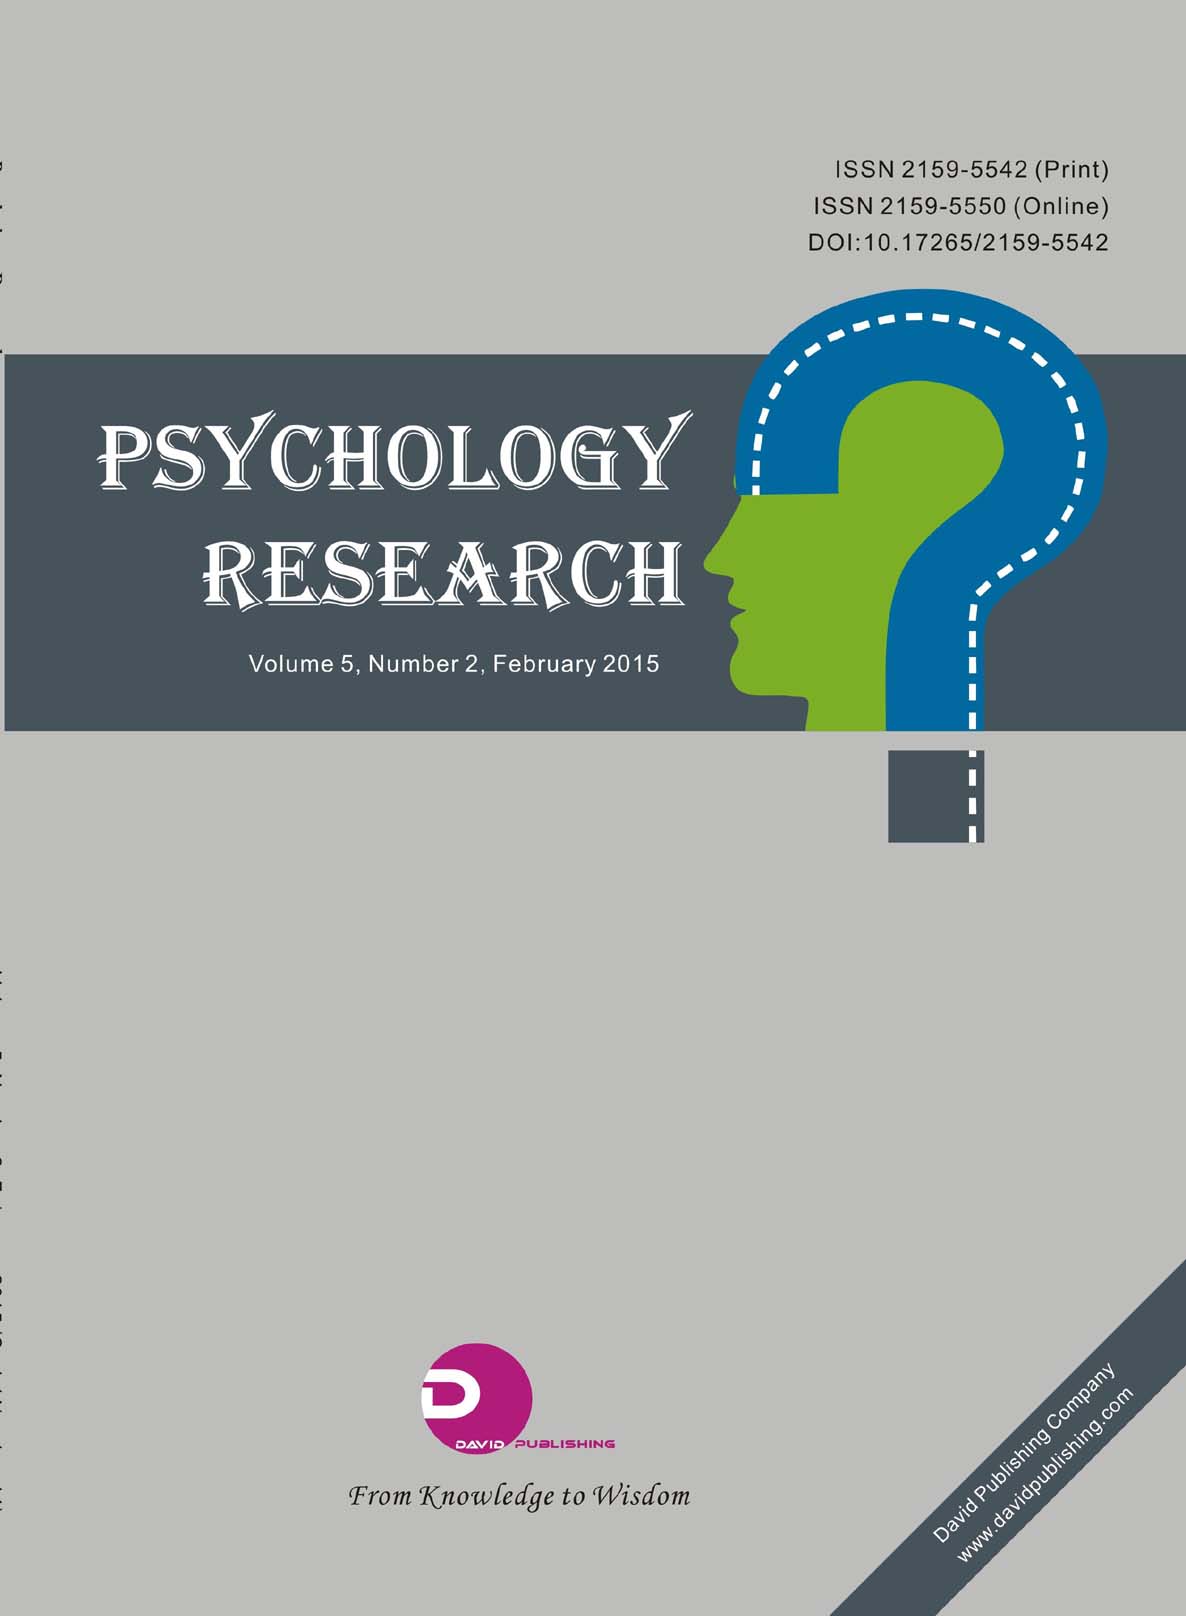 Psychology Research